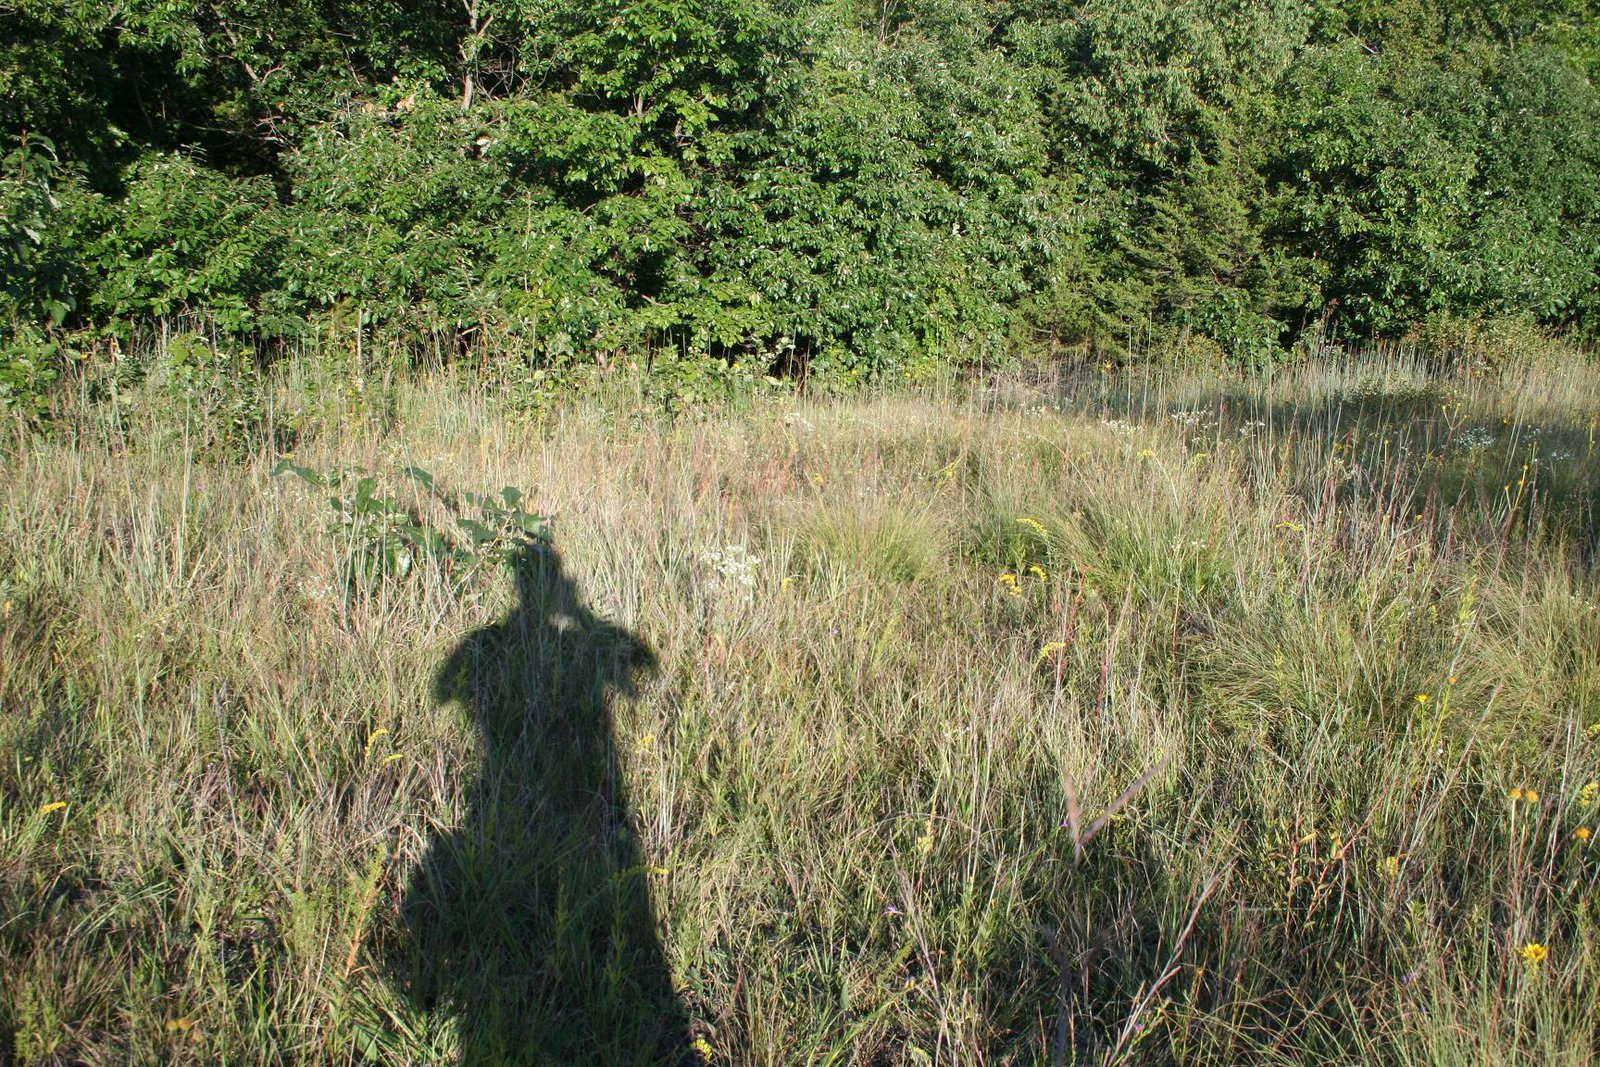 Shadow of myself